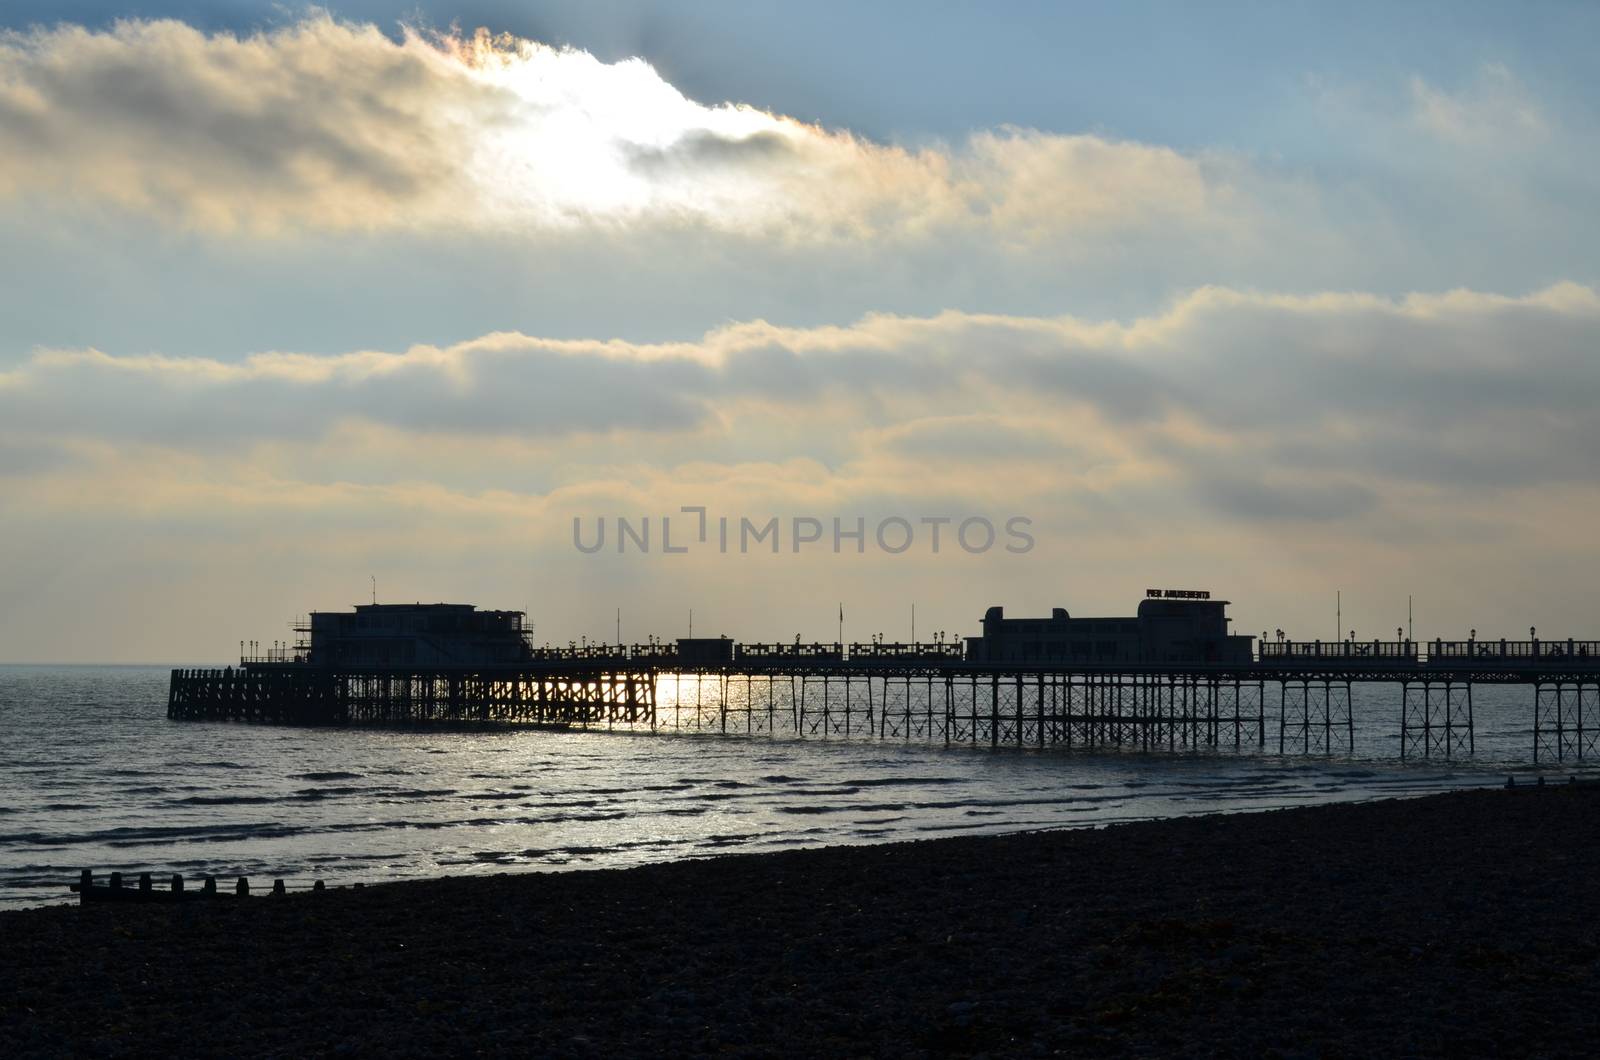 Victorian pier in the Southern England seaside resort of Worthing.Image taken in December 2013.